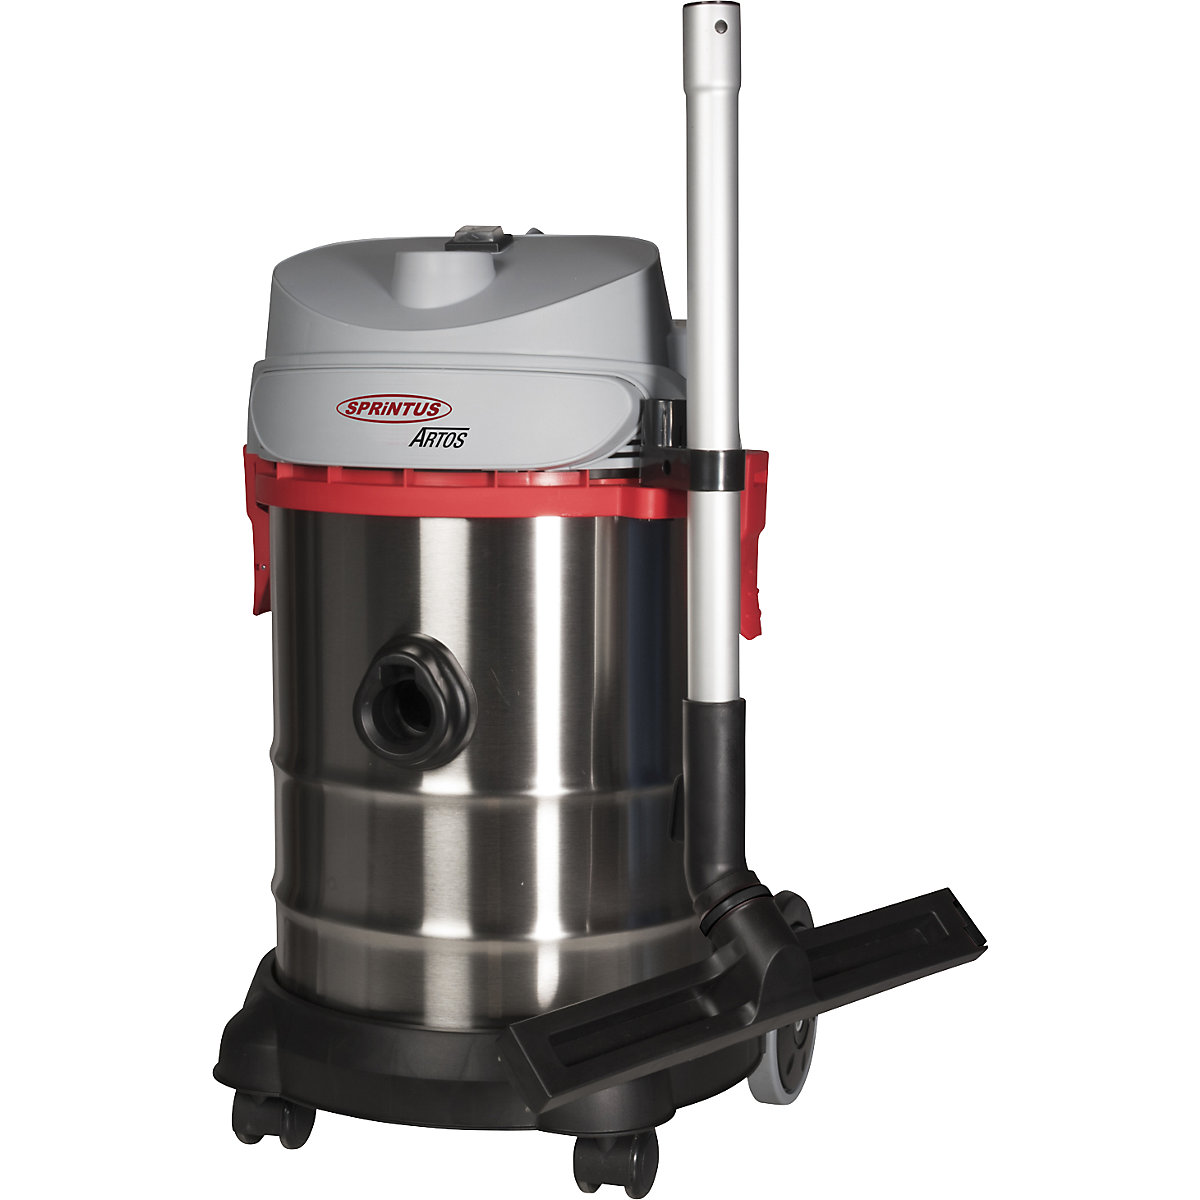 Wet and dry vacuum cleaner – Sprintus